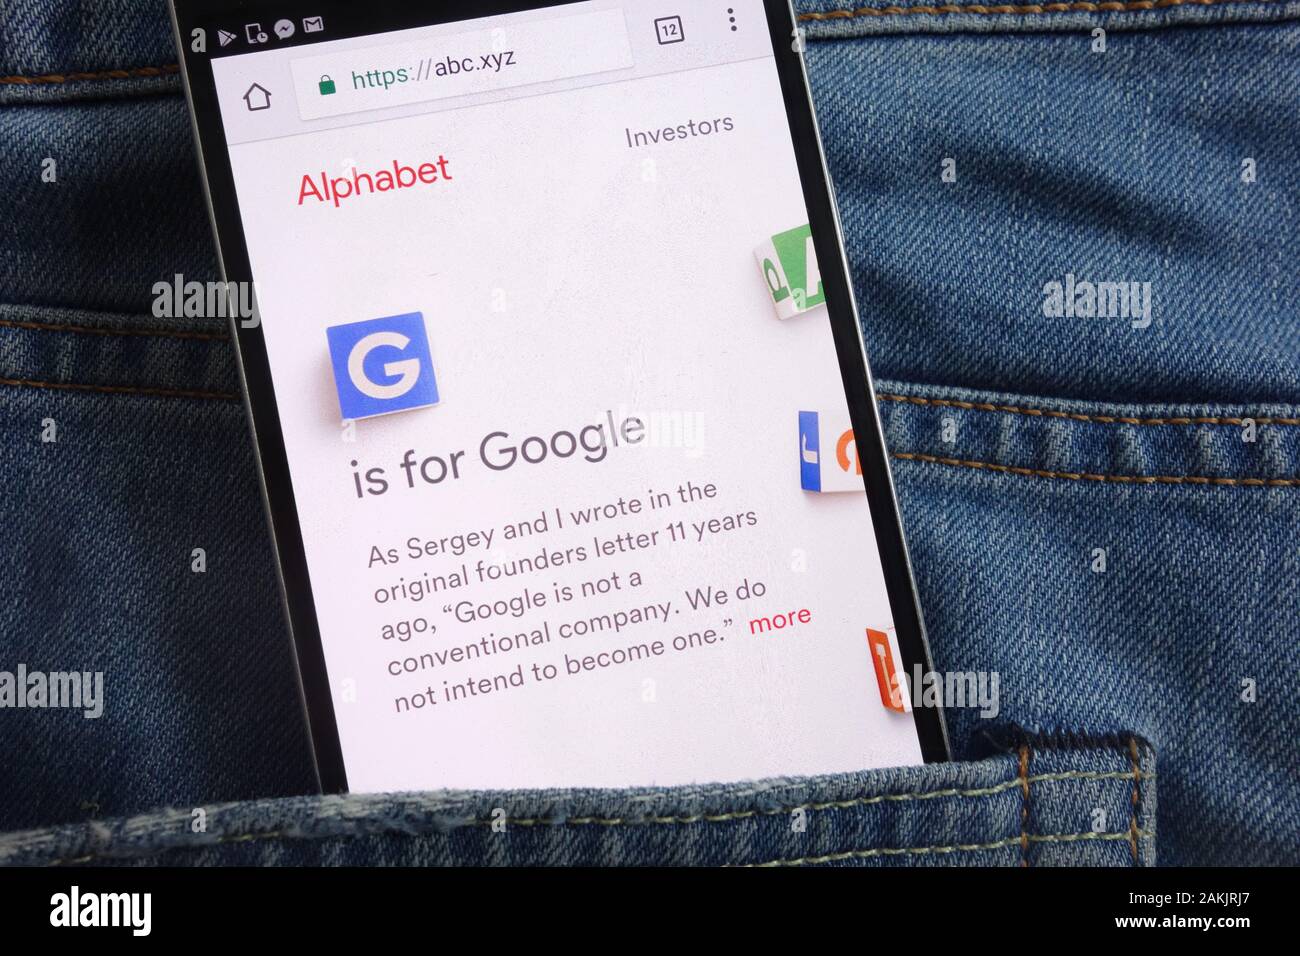 Alphabet Inc. website displayed on smartphone hidden in jeans pocket Stock Photo